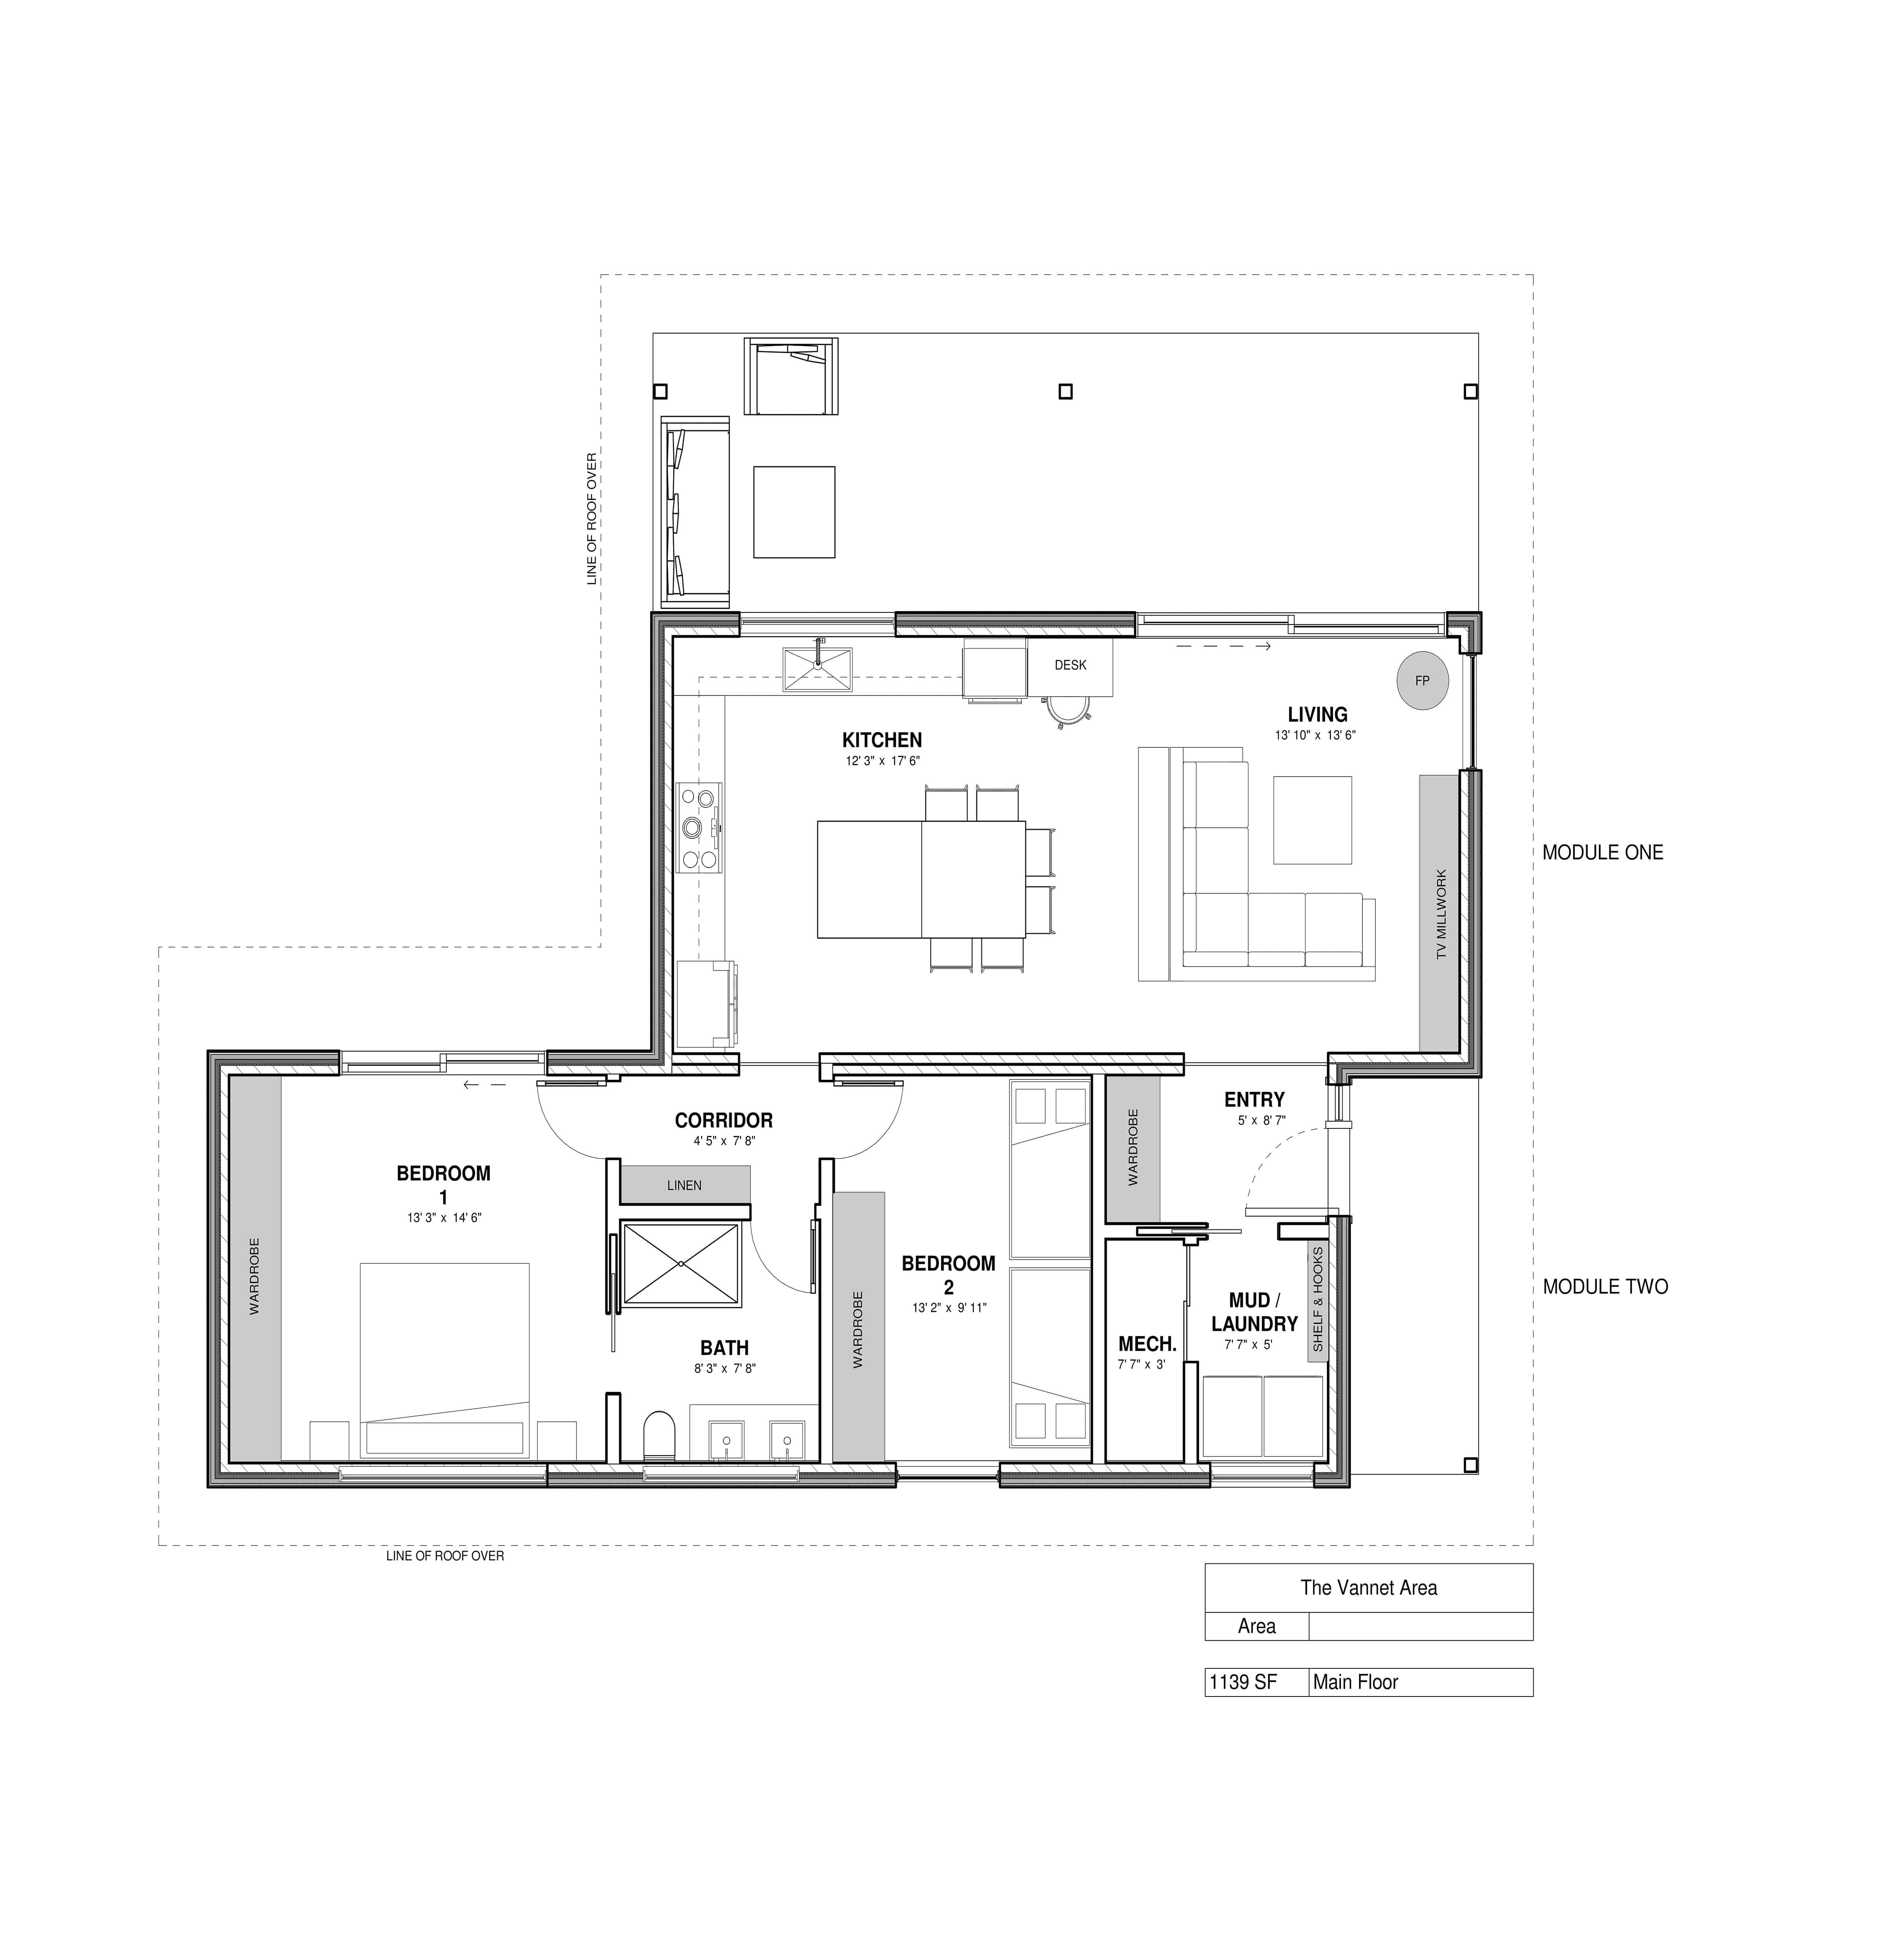 Dvele Vannet modern prefab home floor plan.